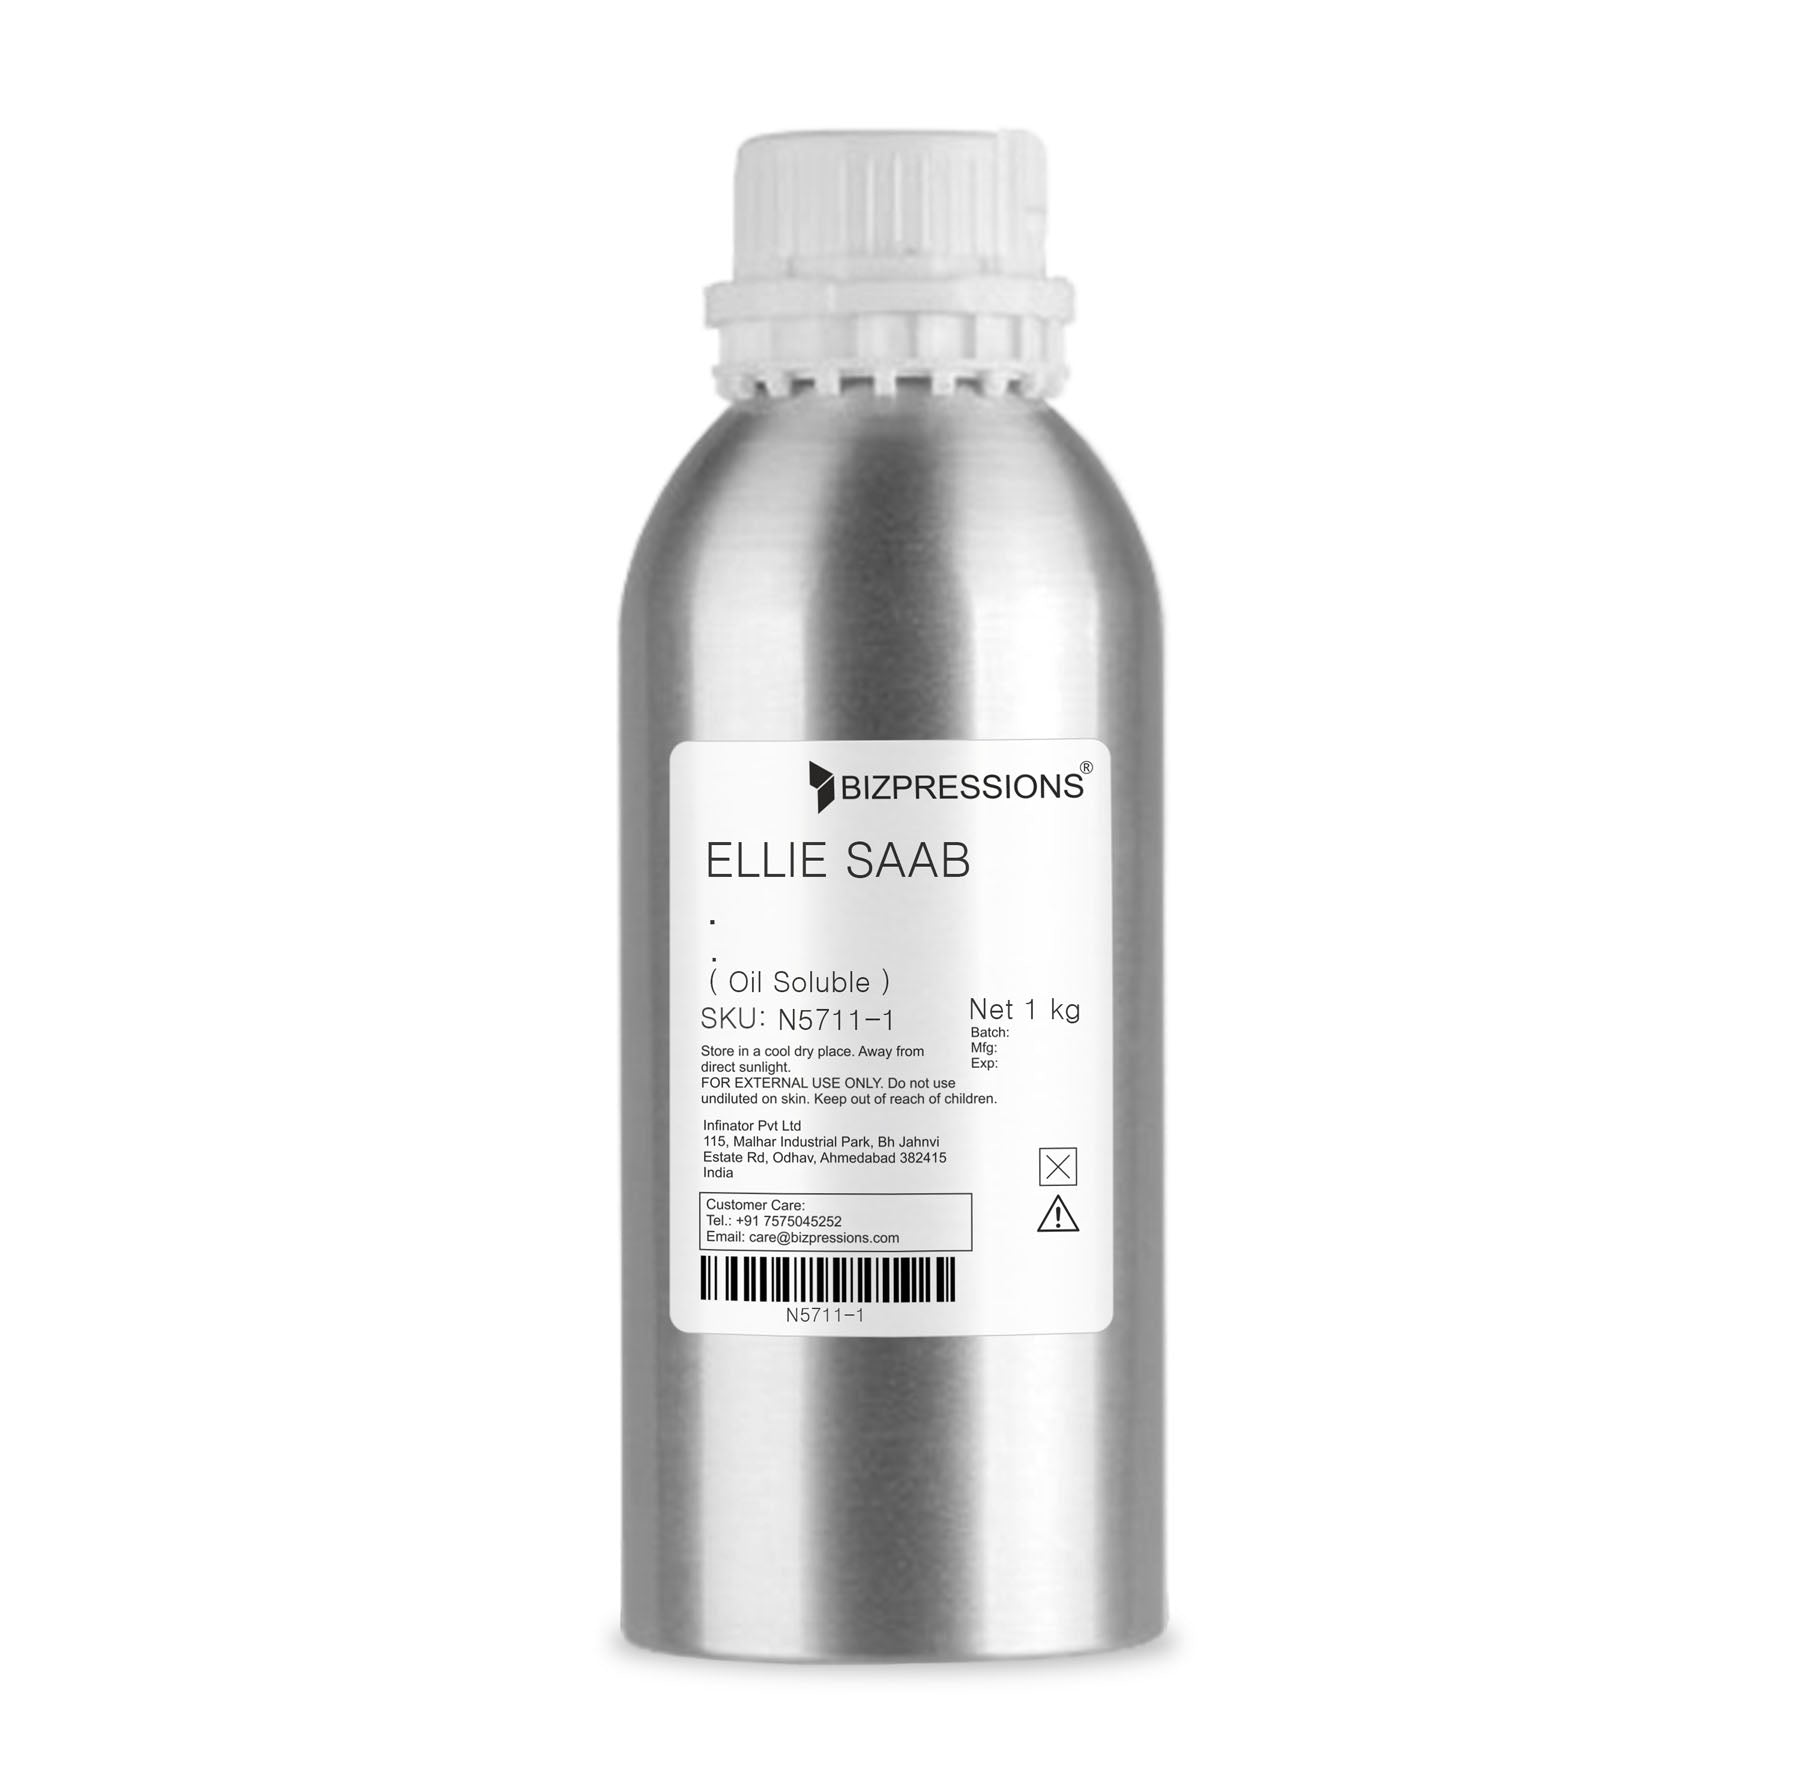 ELLIE SAAB - Fragrance ( Oil Soluble ) - 1 kg